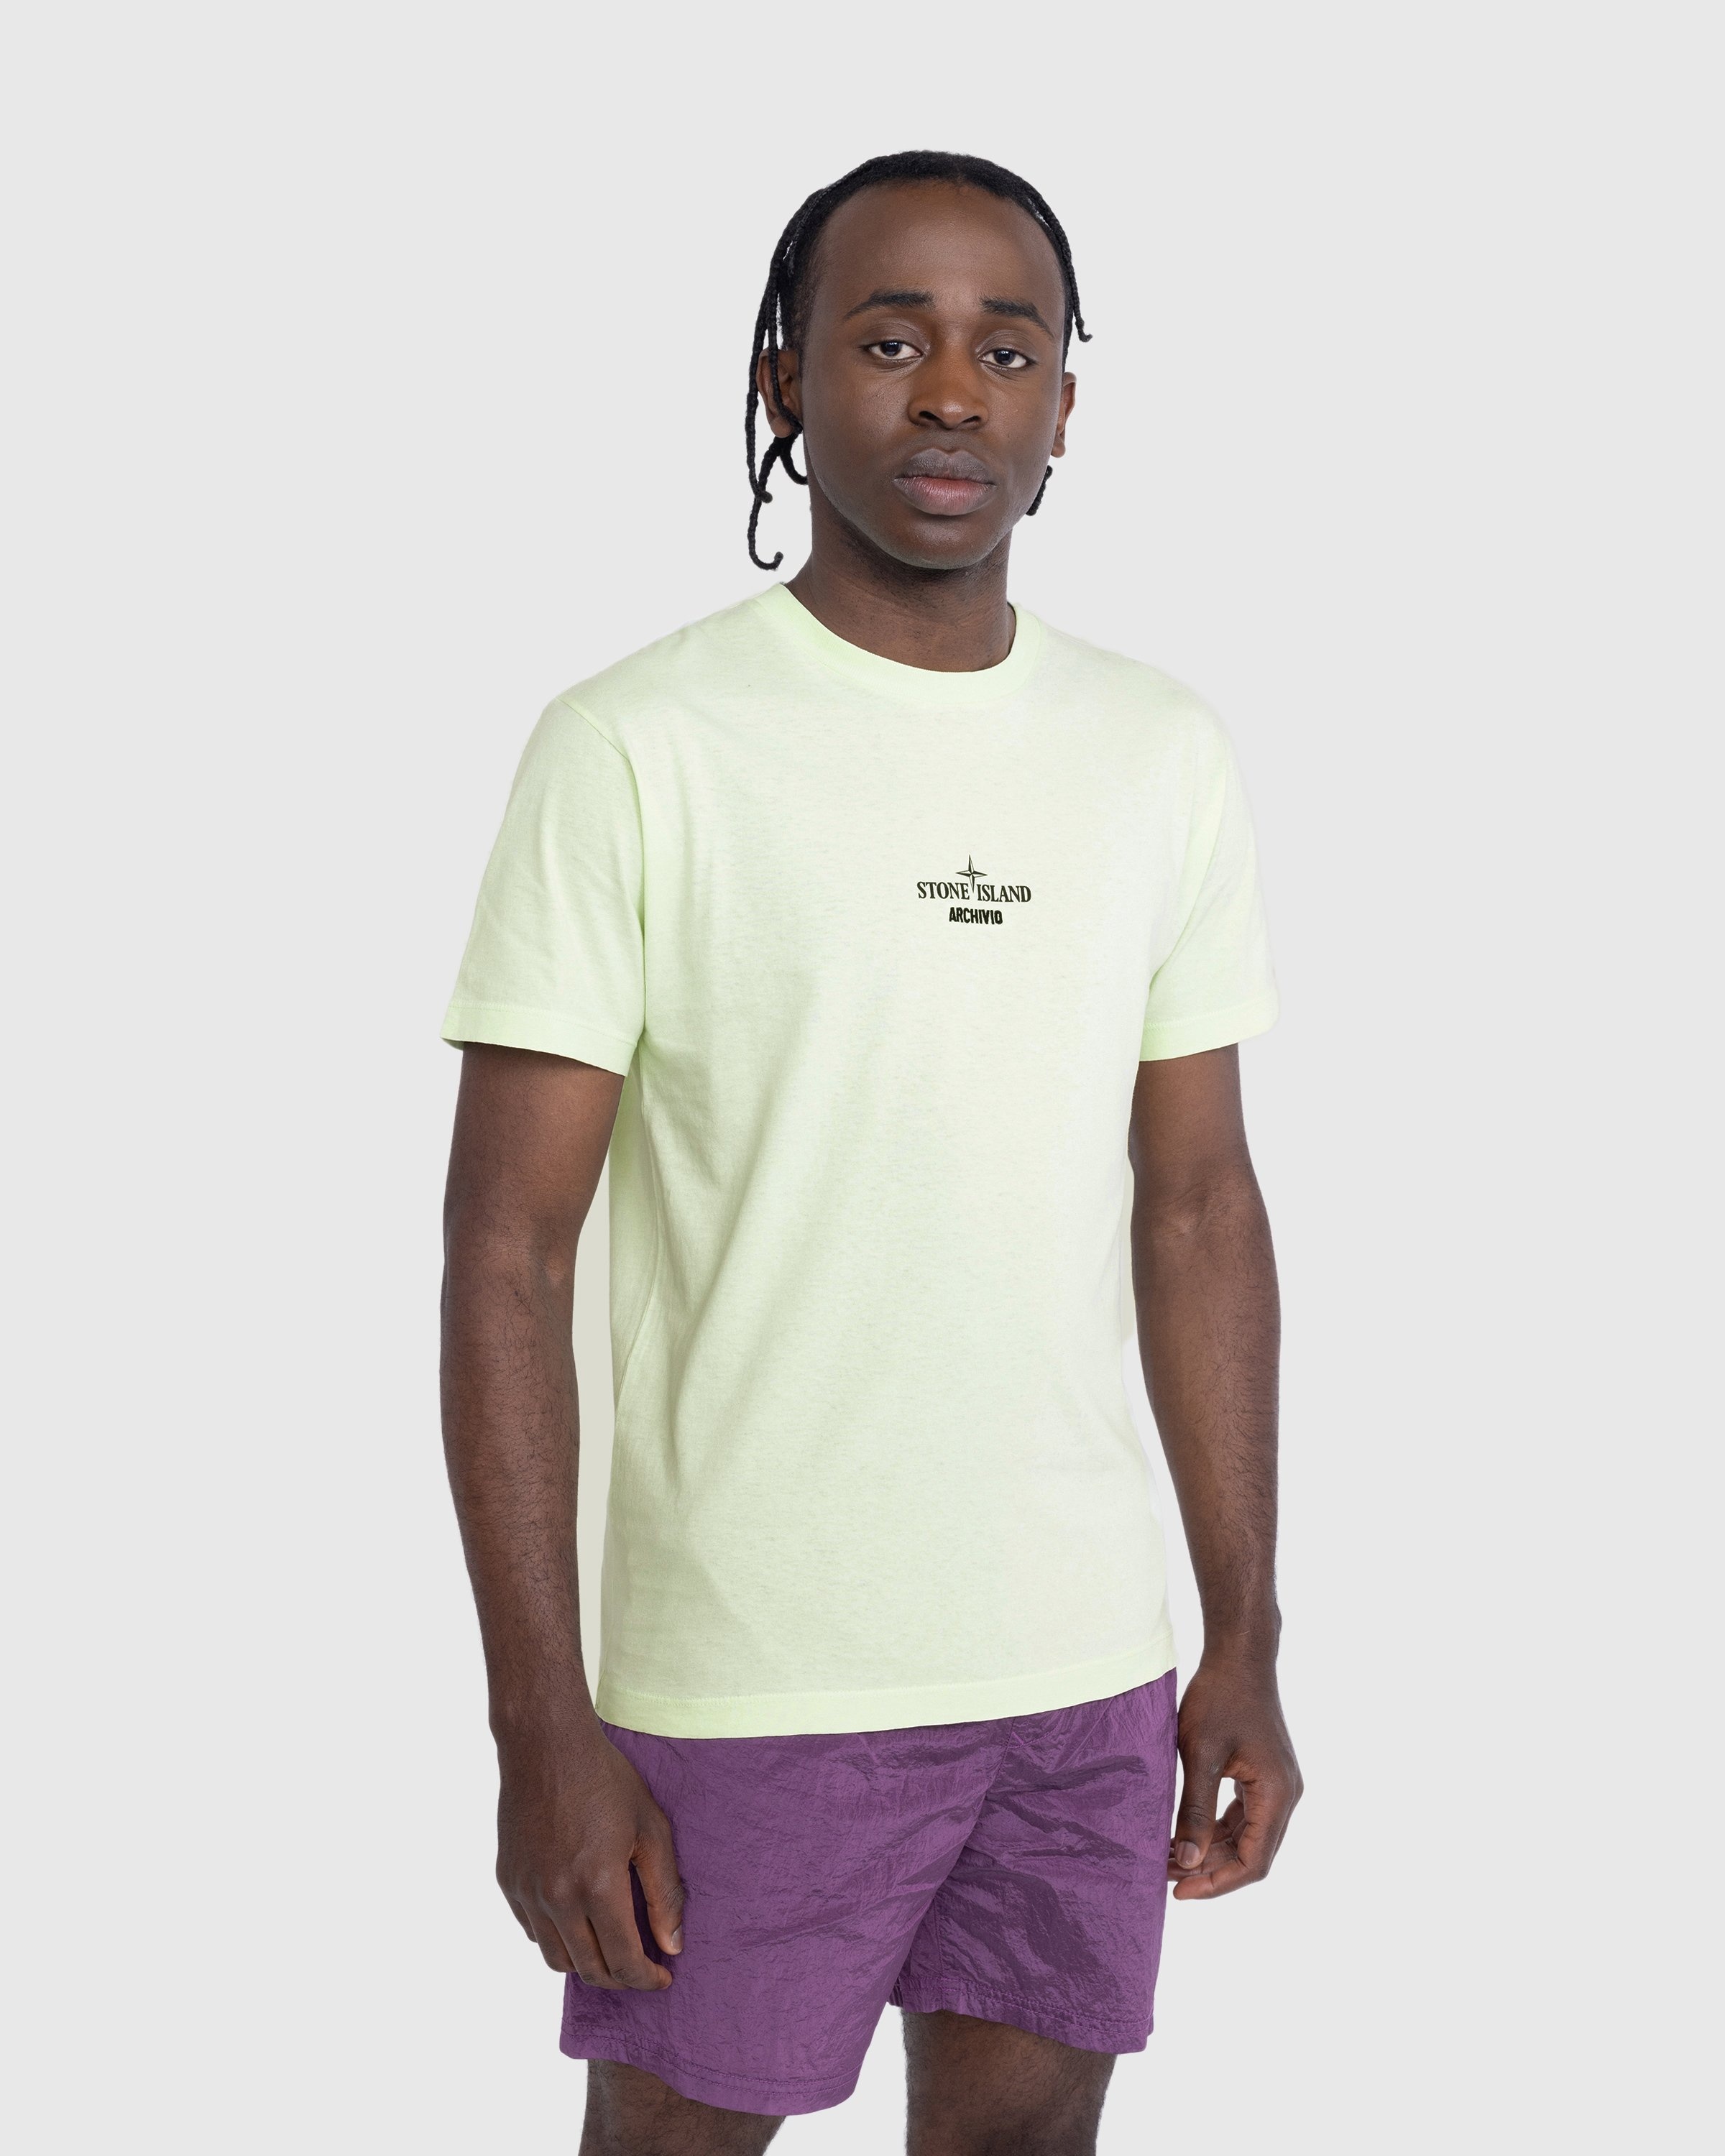 Stone Island – T-Shirt Green 2NS91 | Highsnobiety Shop